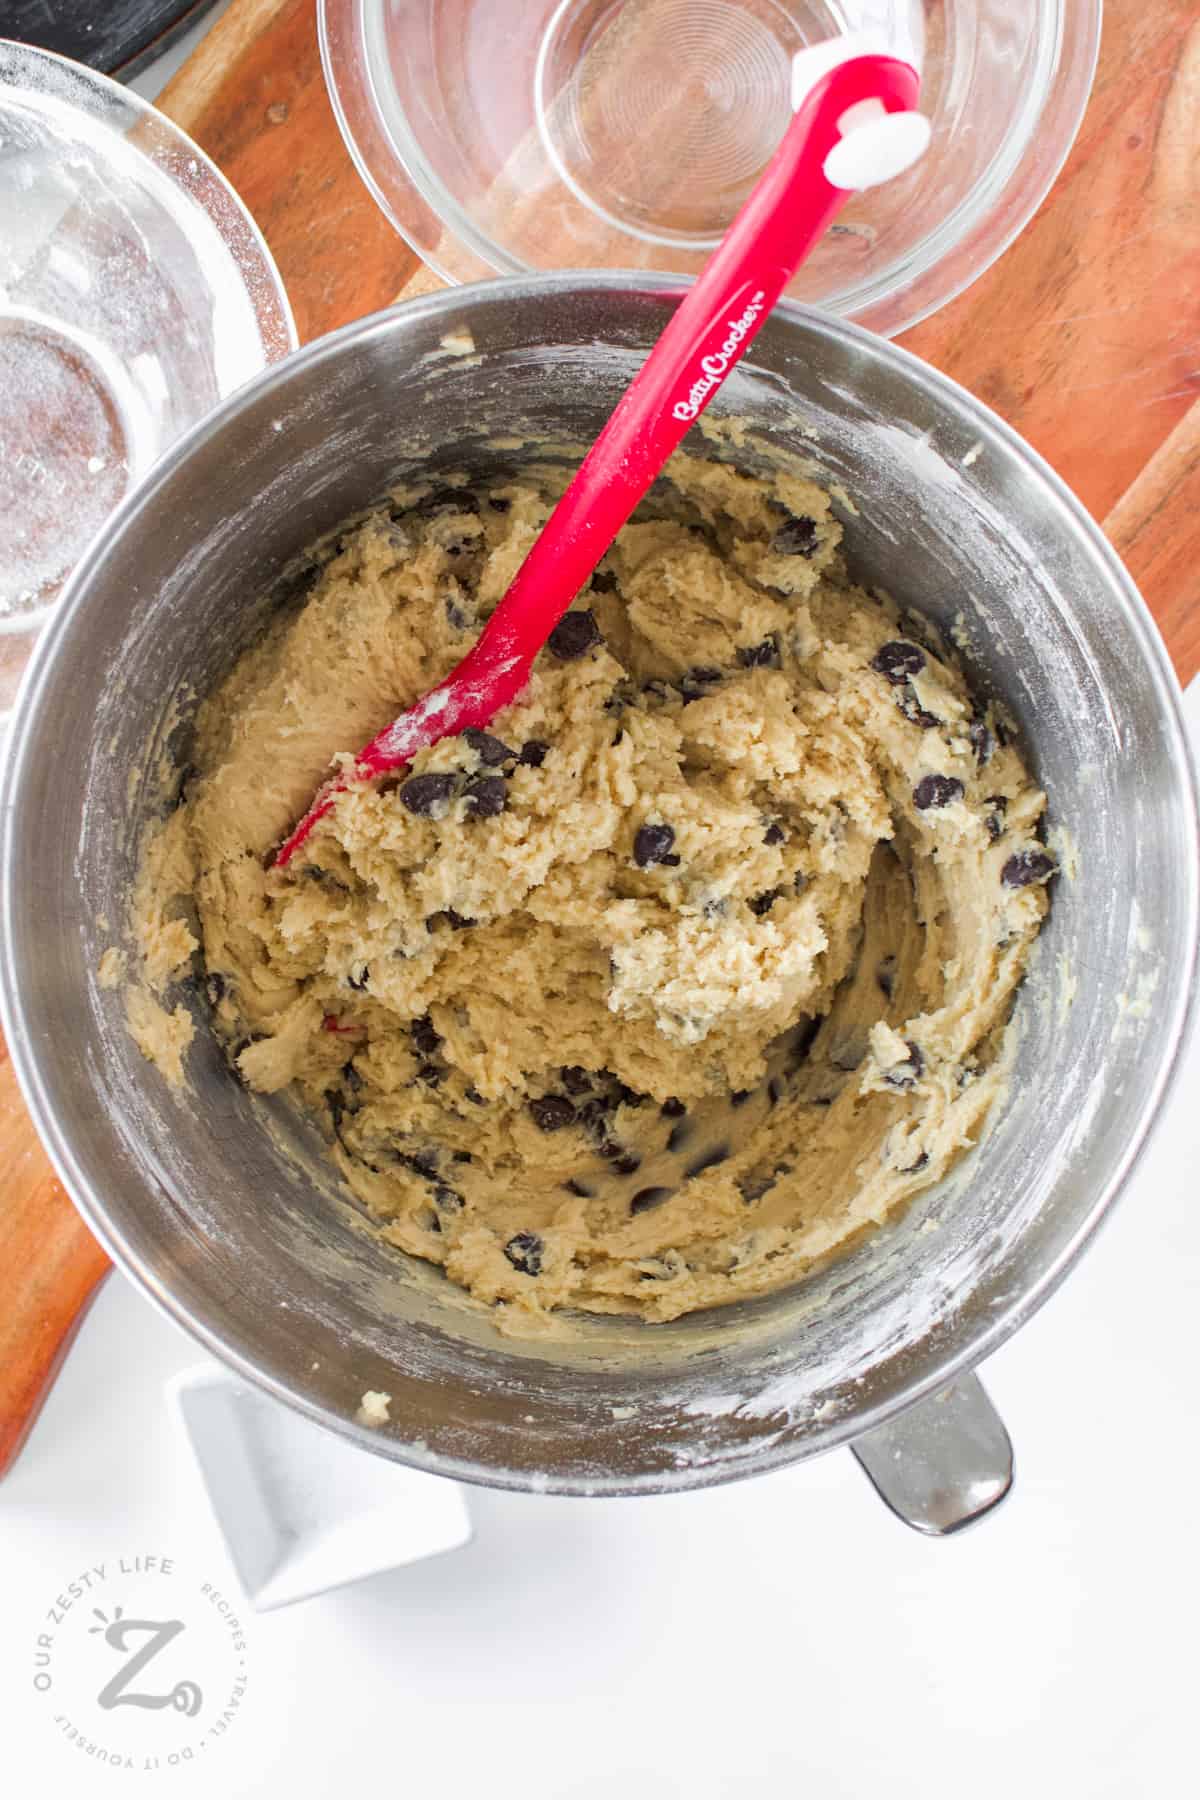 mixed ingredients to make Skillet Cookie Recipe